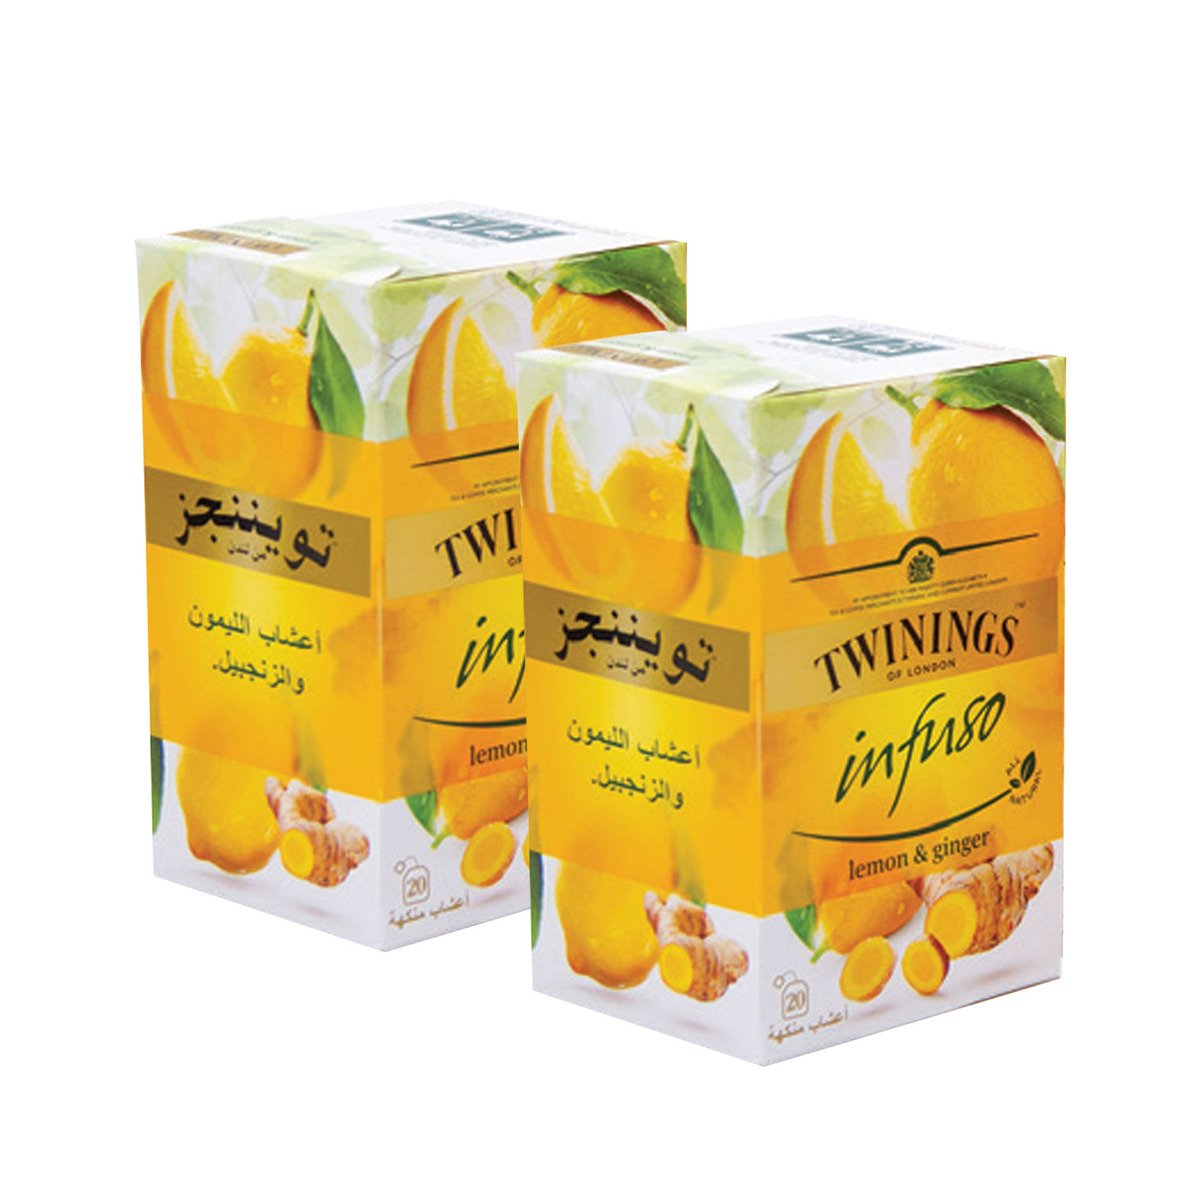 Twinings Tea Infuso Assorted 2 x 20 Teabags